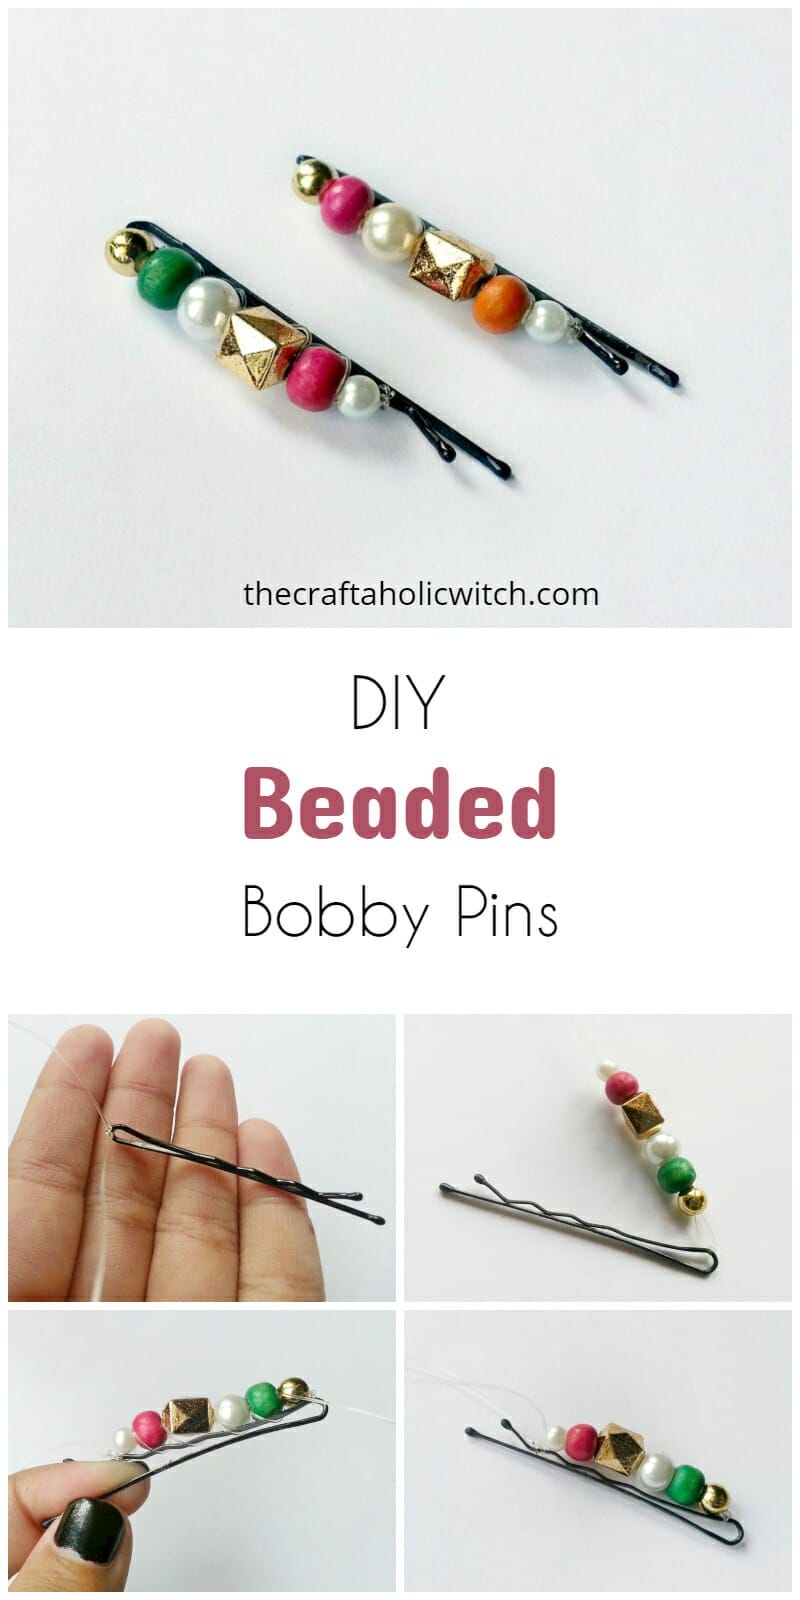 DIY Beaded Bobby Pins